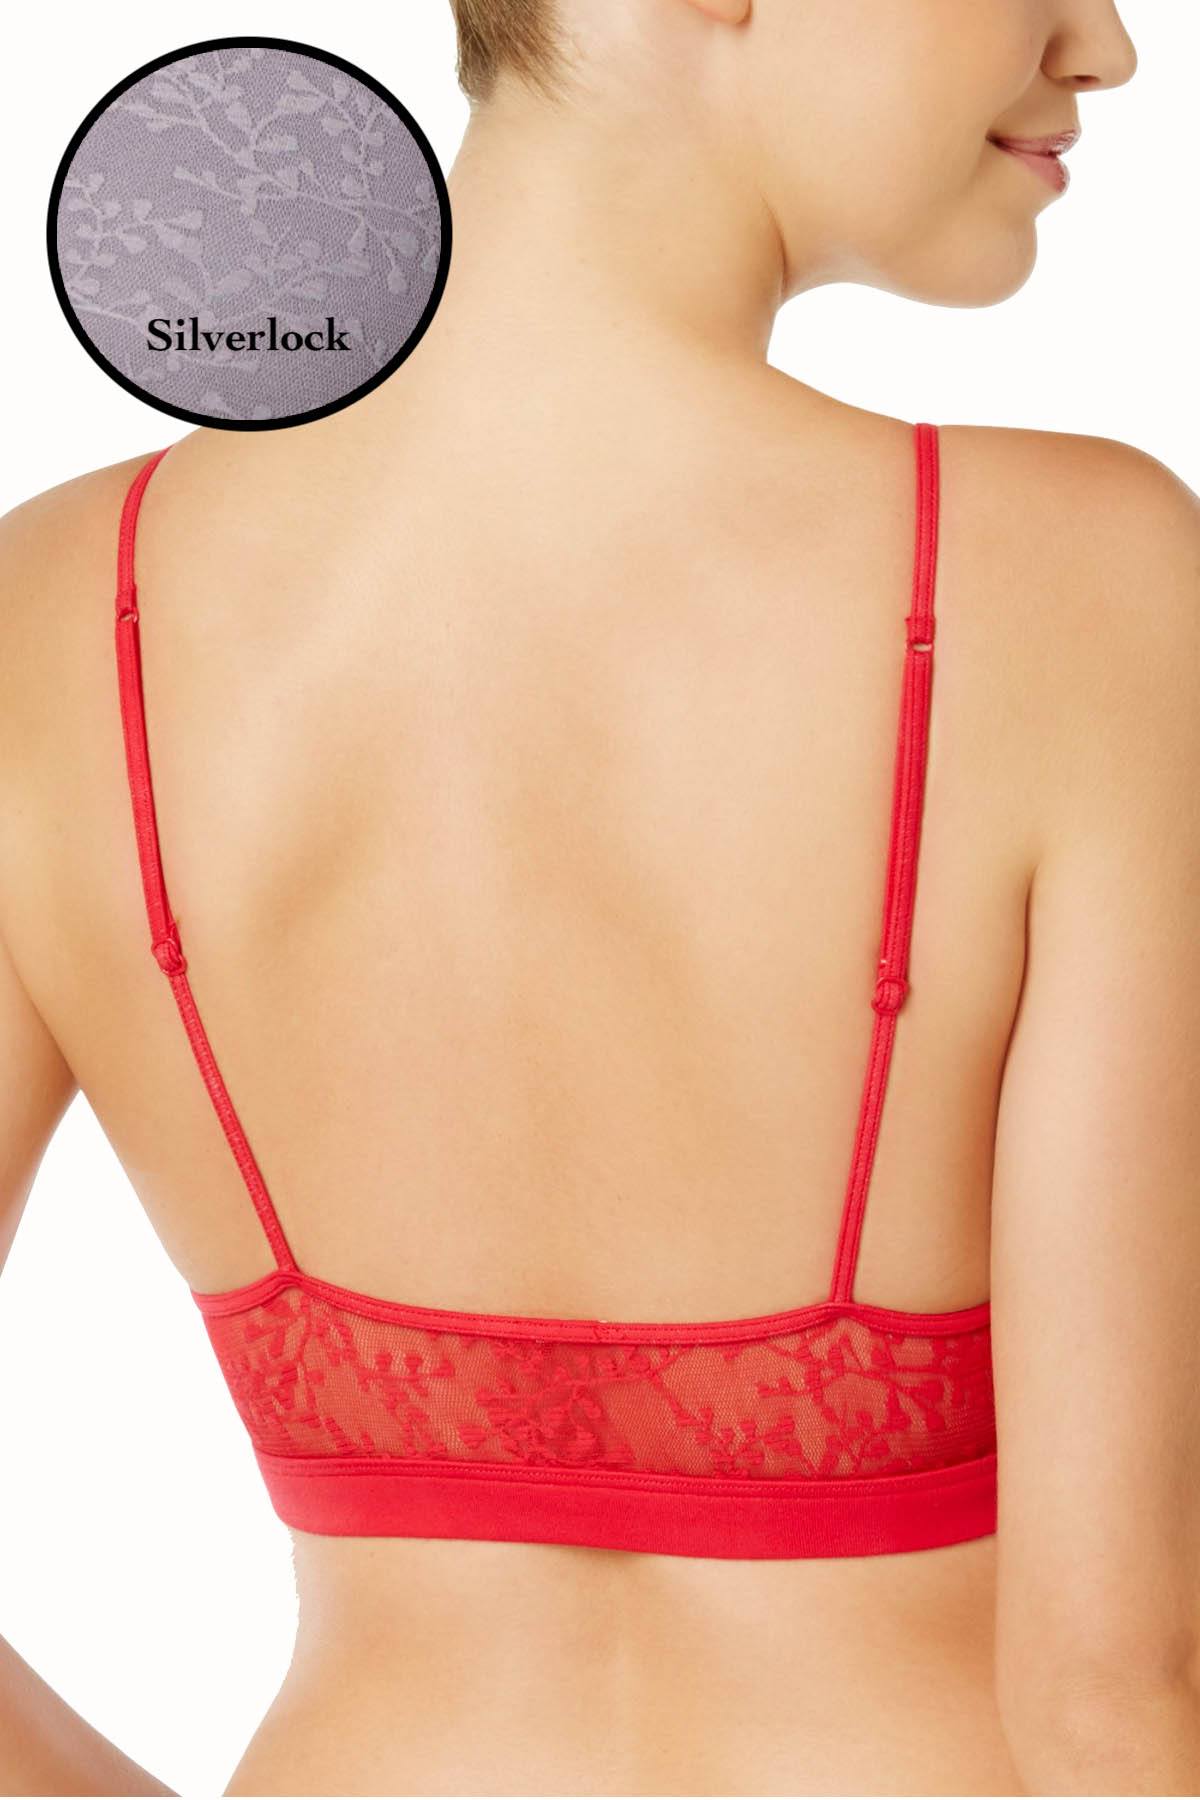 Calvin Klein Silverlock Exclusive Bare Lace Bralette